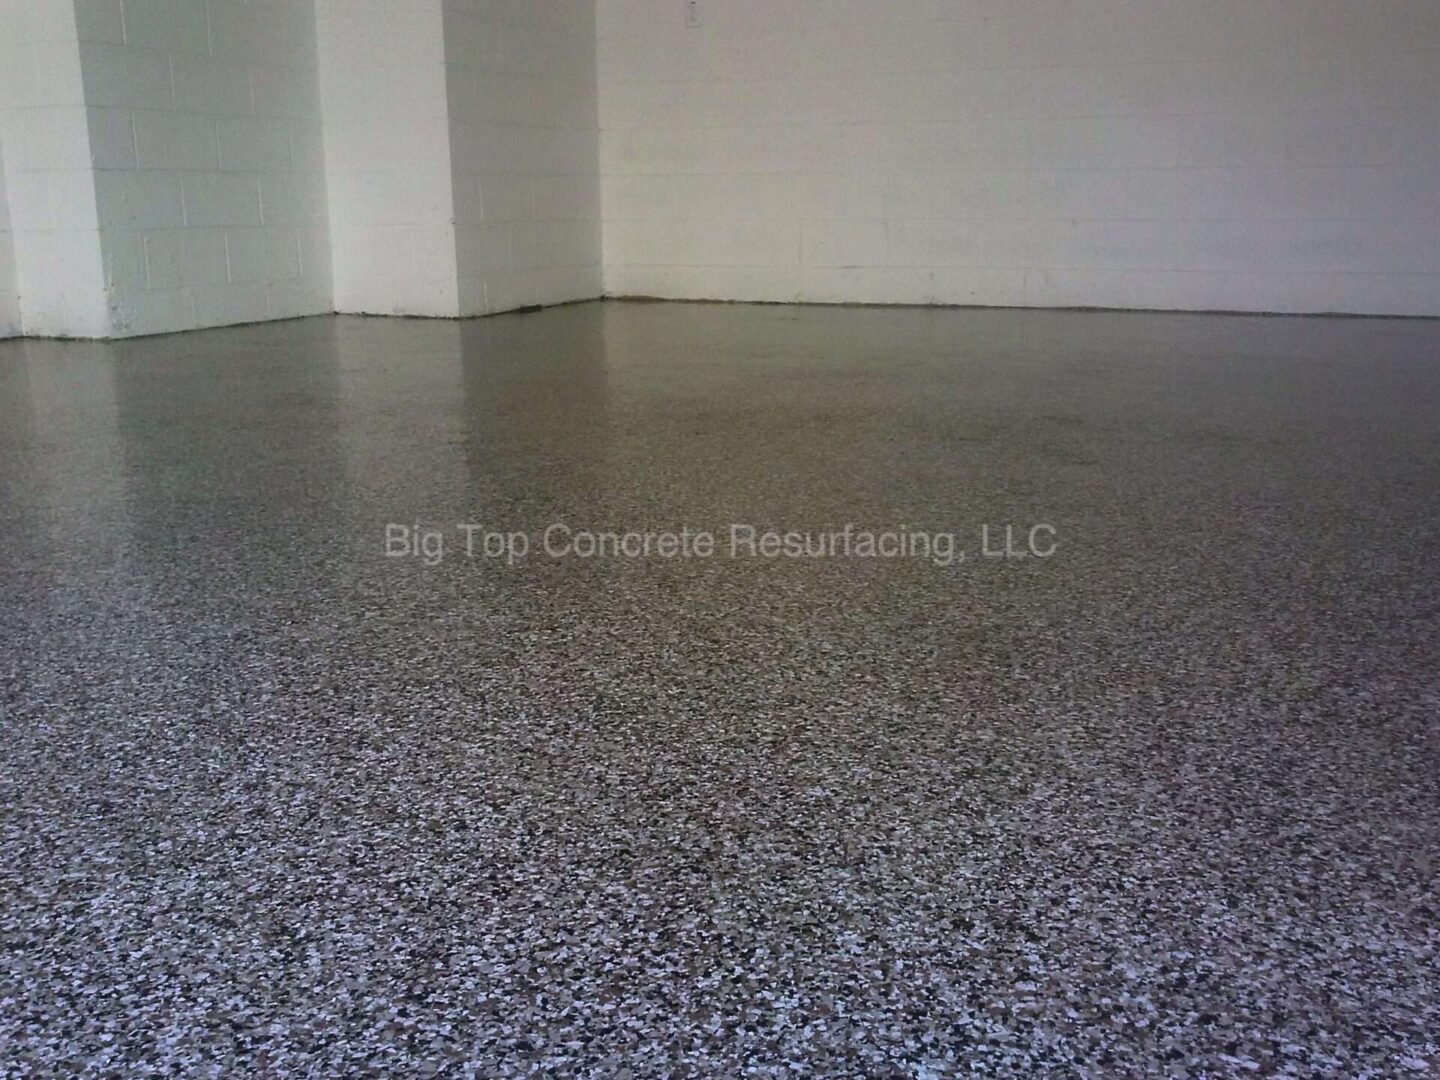 Big Top Concrete Resurfacing